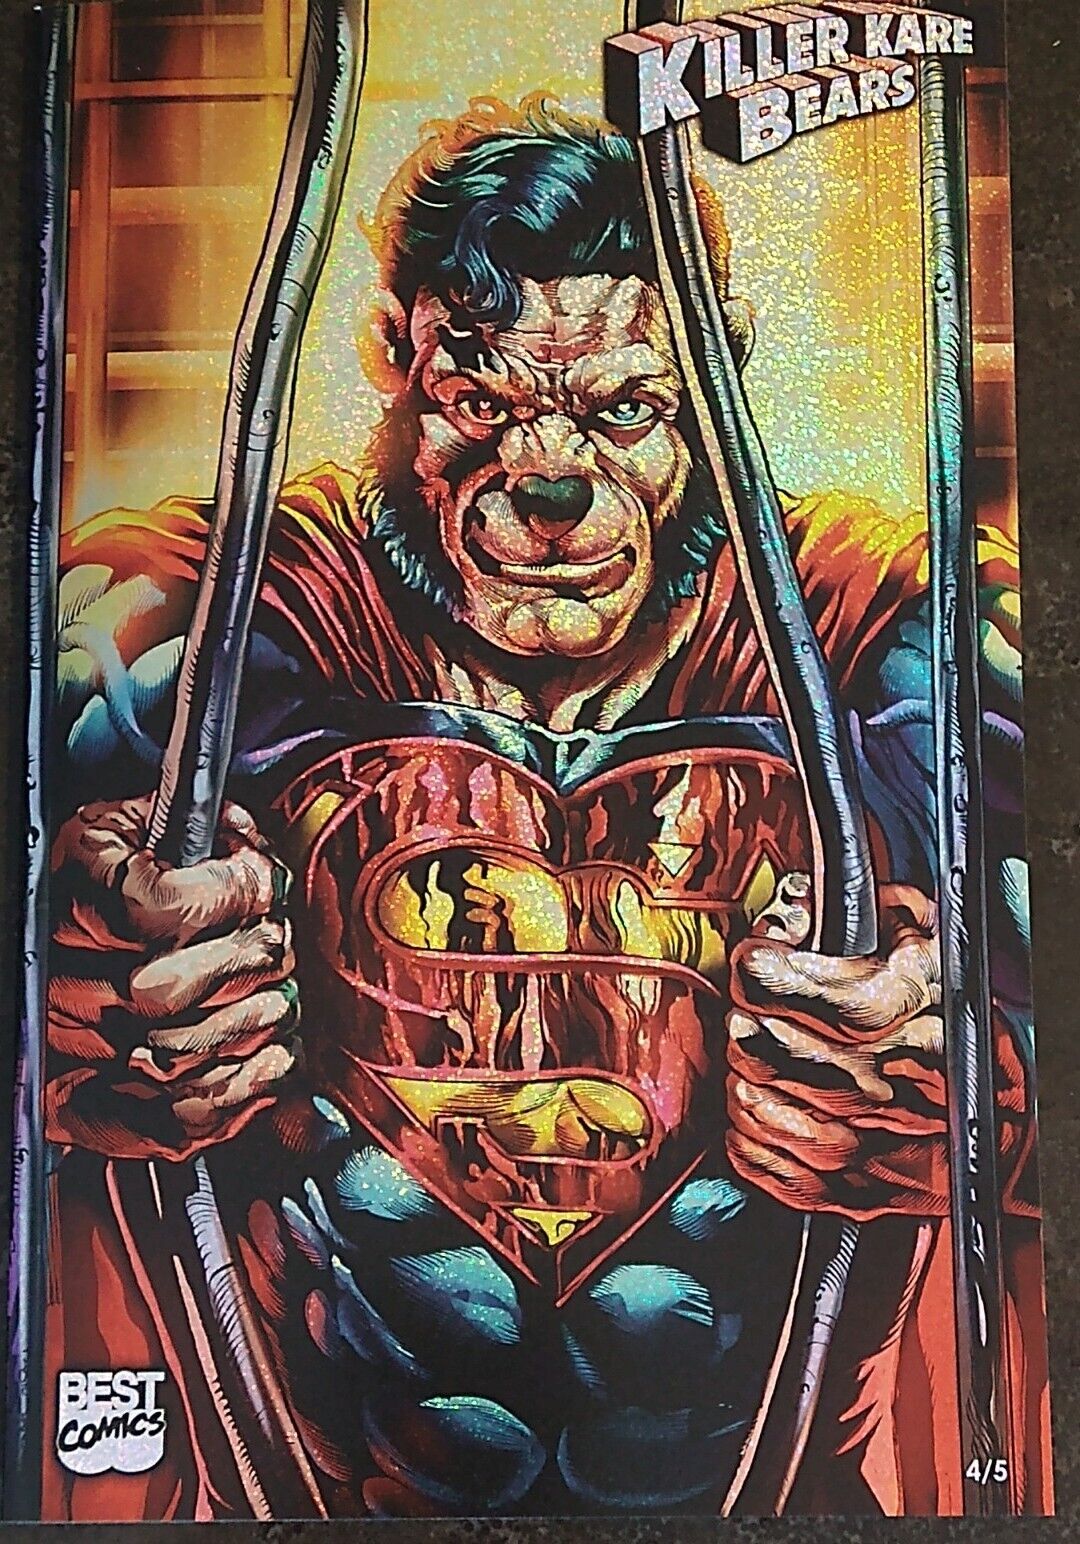 Killer Kare Bears Superman Homage Confetti Foil Cover Variant #4/5 NM/M